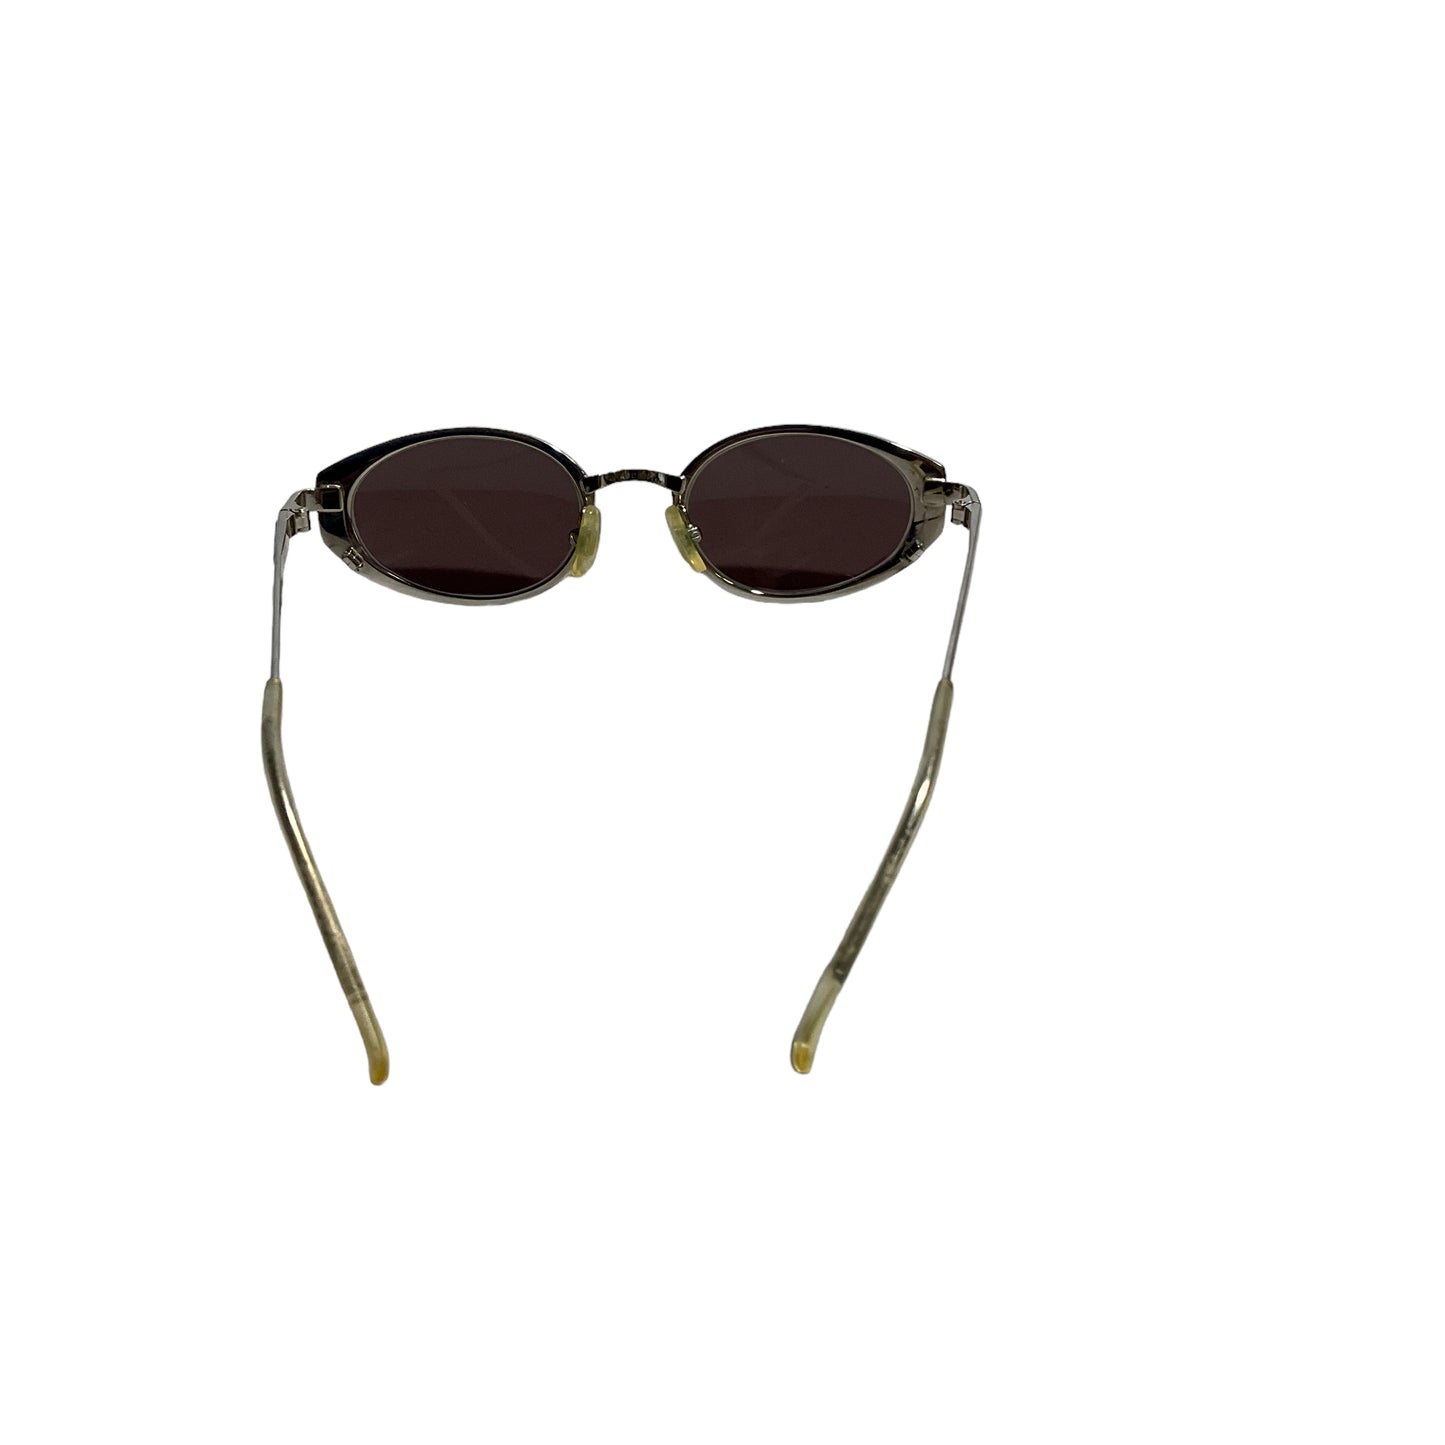 Sunglasses Designer By Isaac Mizrahi